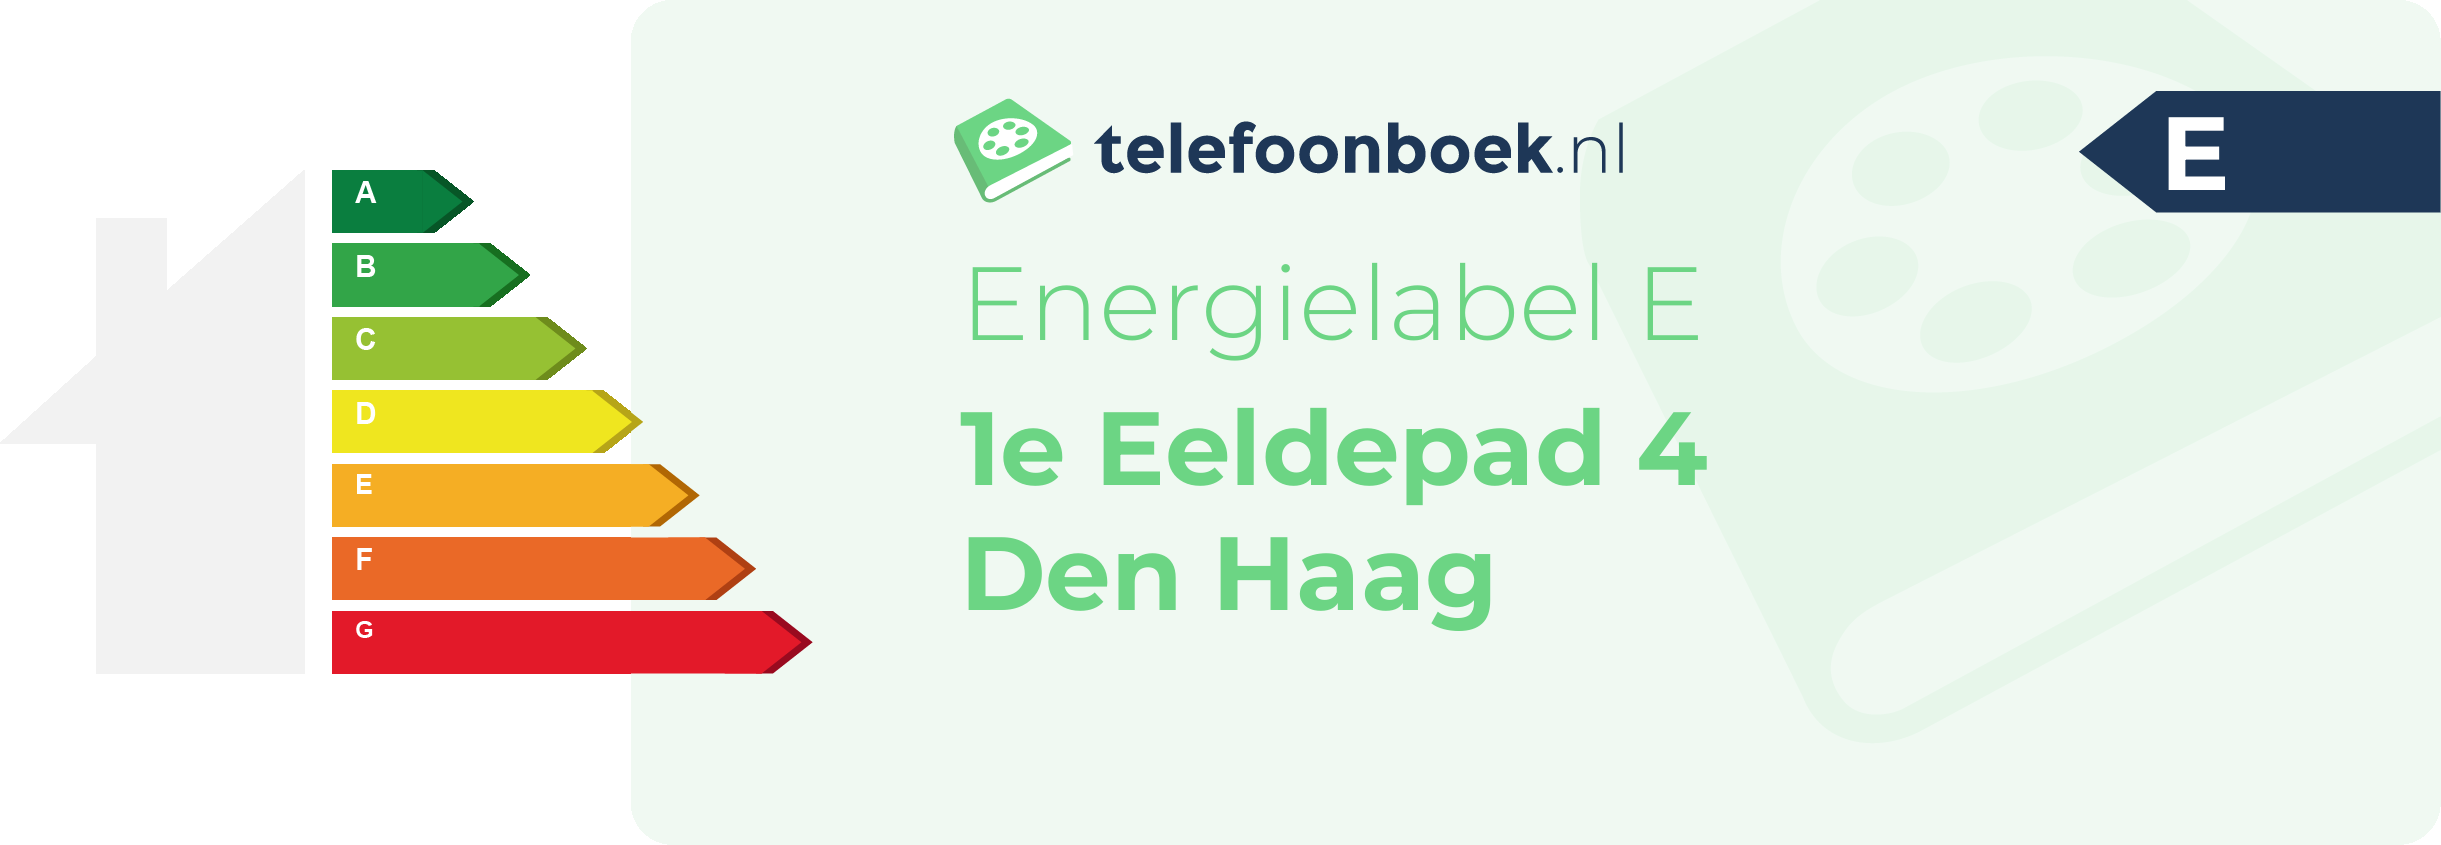 Energielabel 1e Eeldepad 4 Den Haag